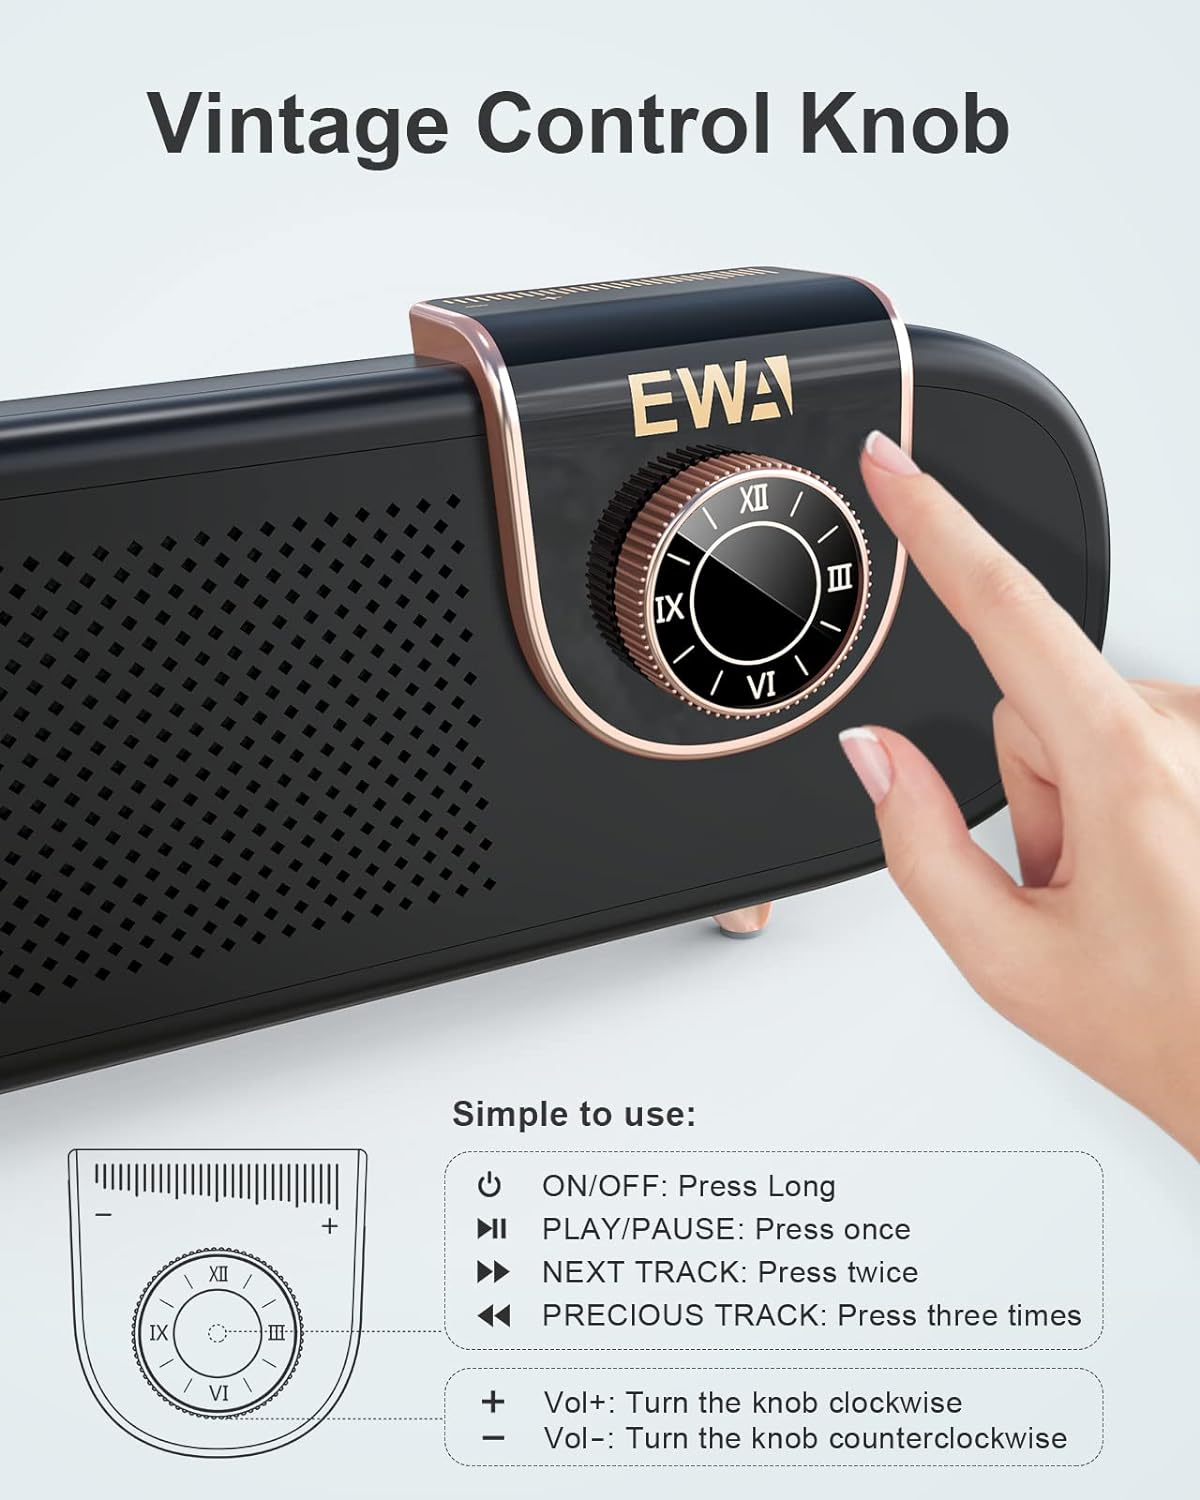 EWA L102 Bluetooth Speaker